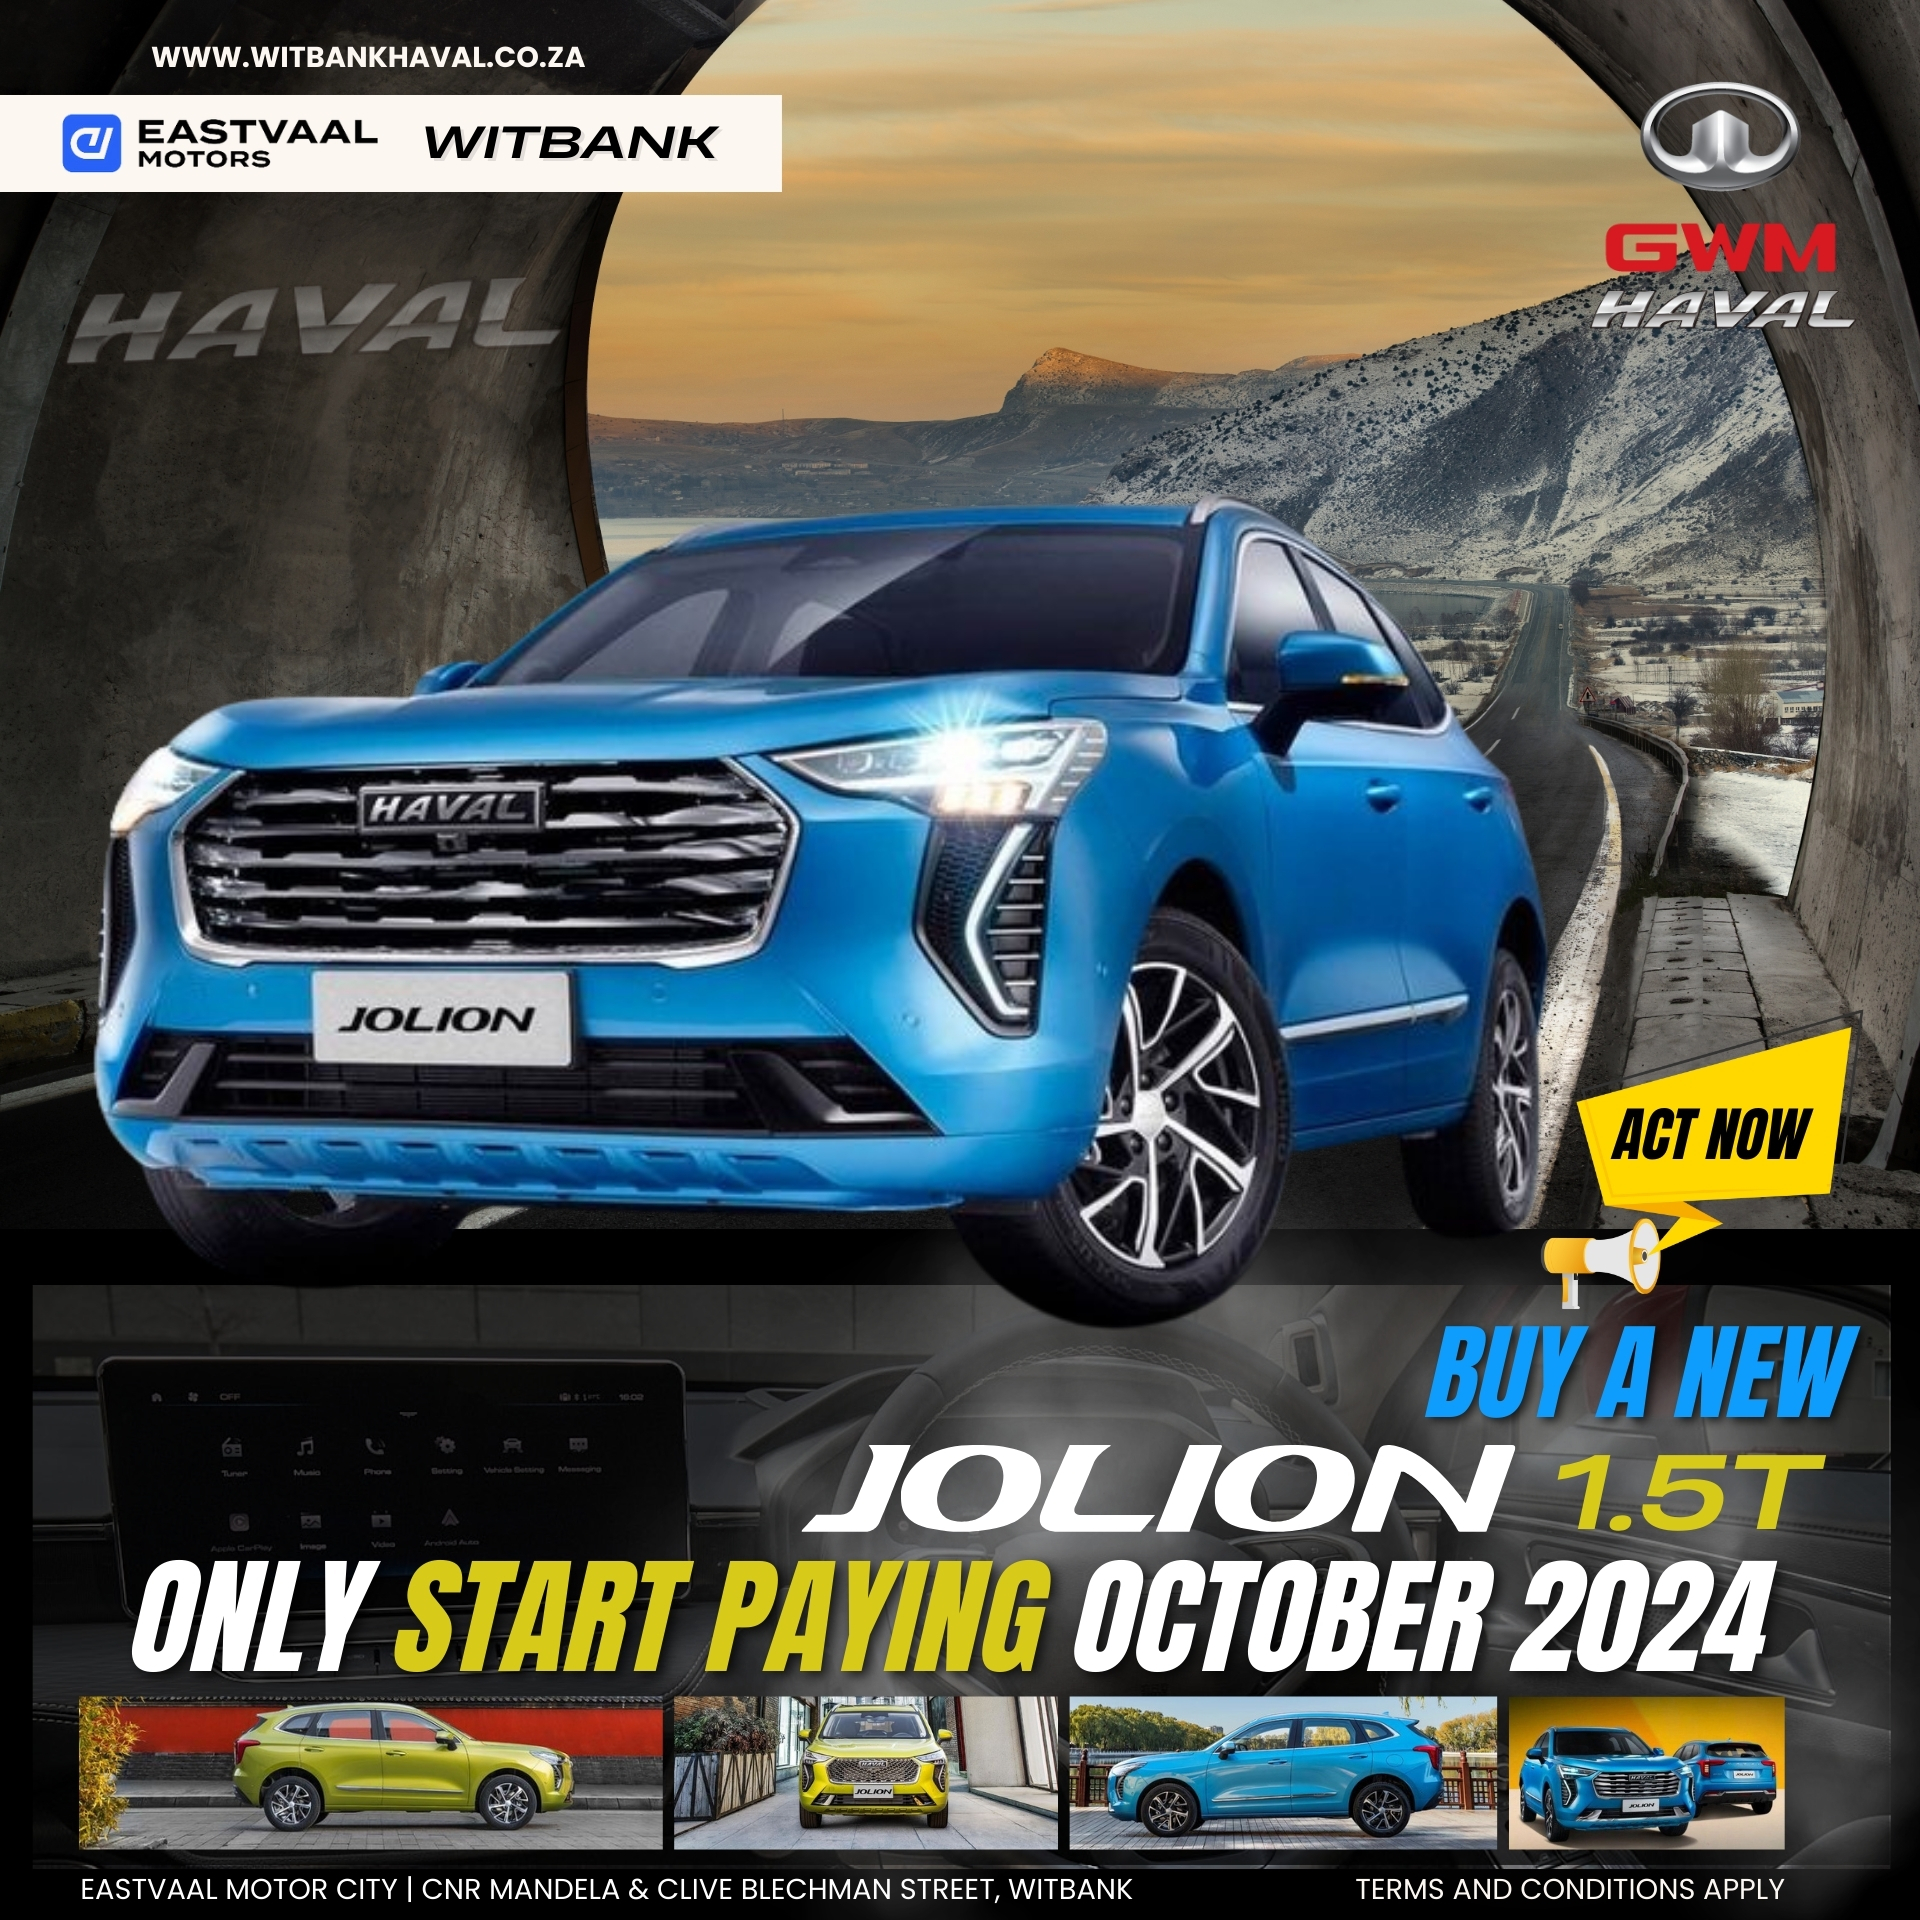 Haval Jolion 1.5T image from Eastvaal Motors